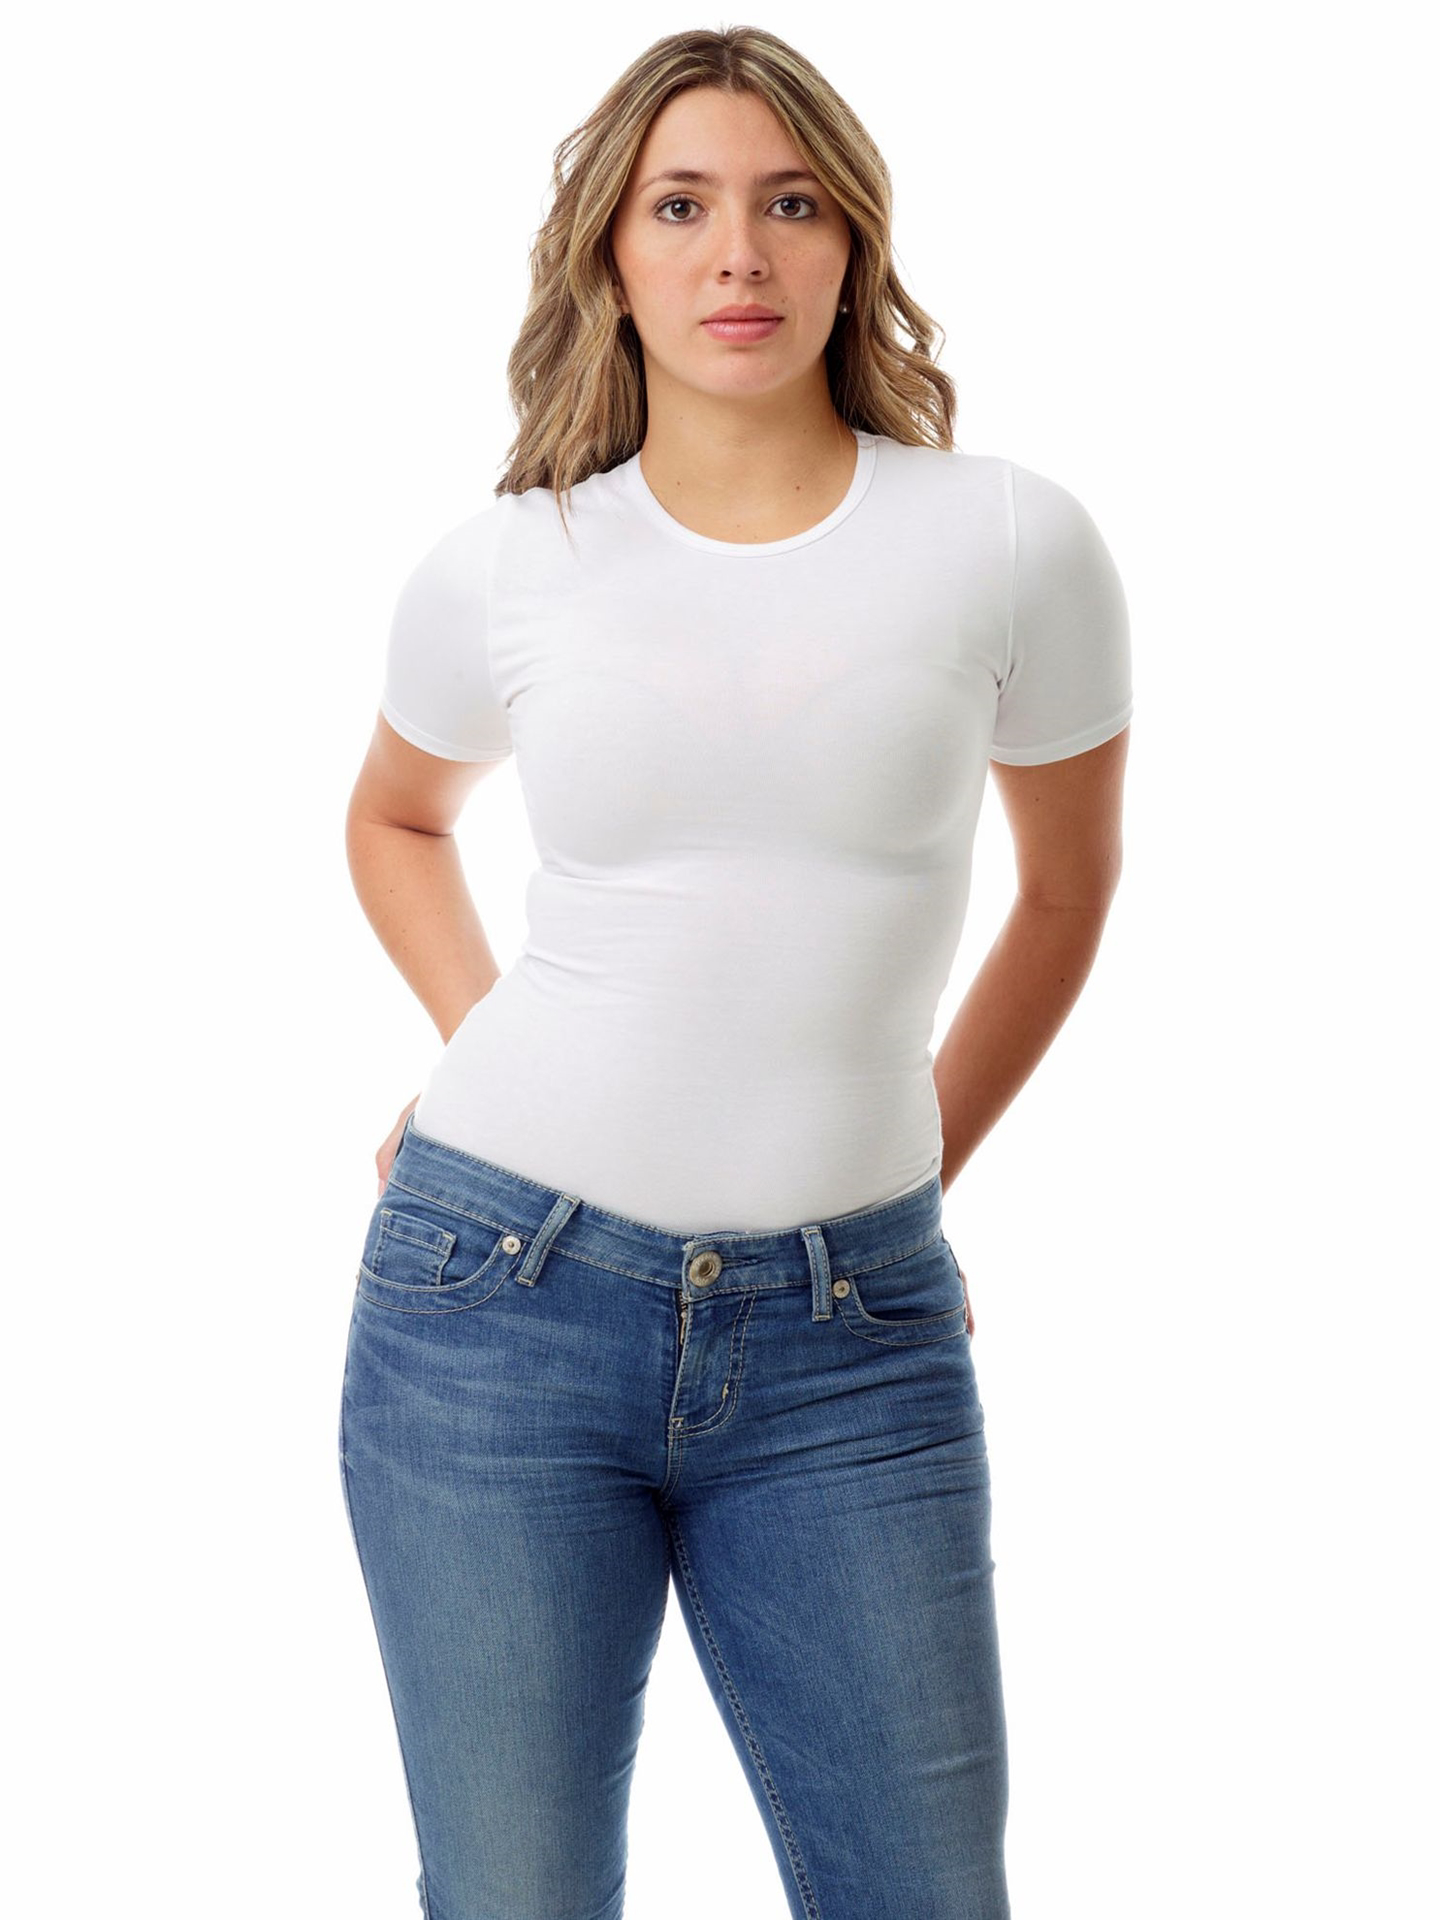 Women's Ultra Light Cotton Spandex Compression Crew Neck T-shirt